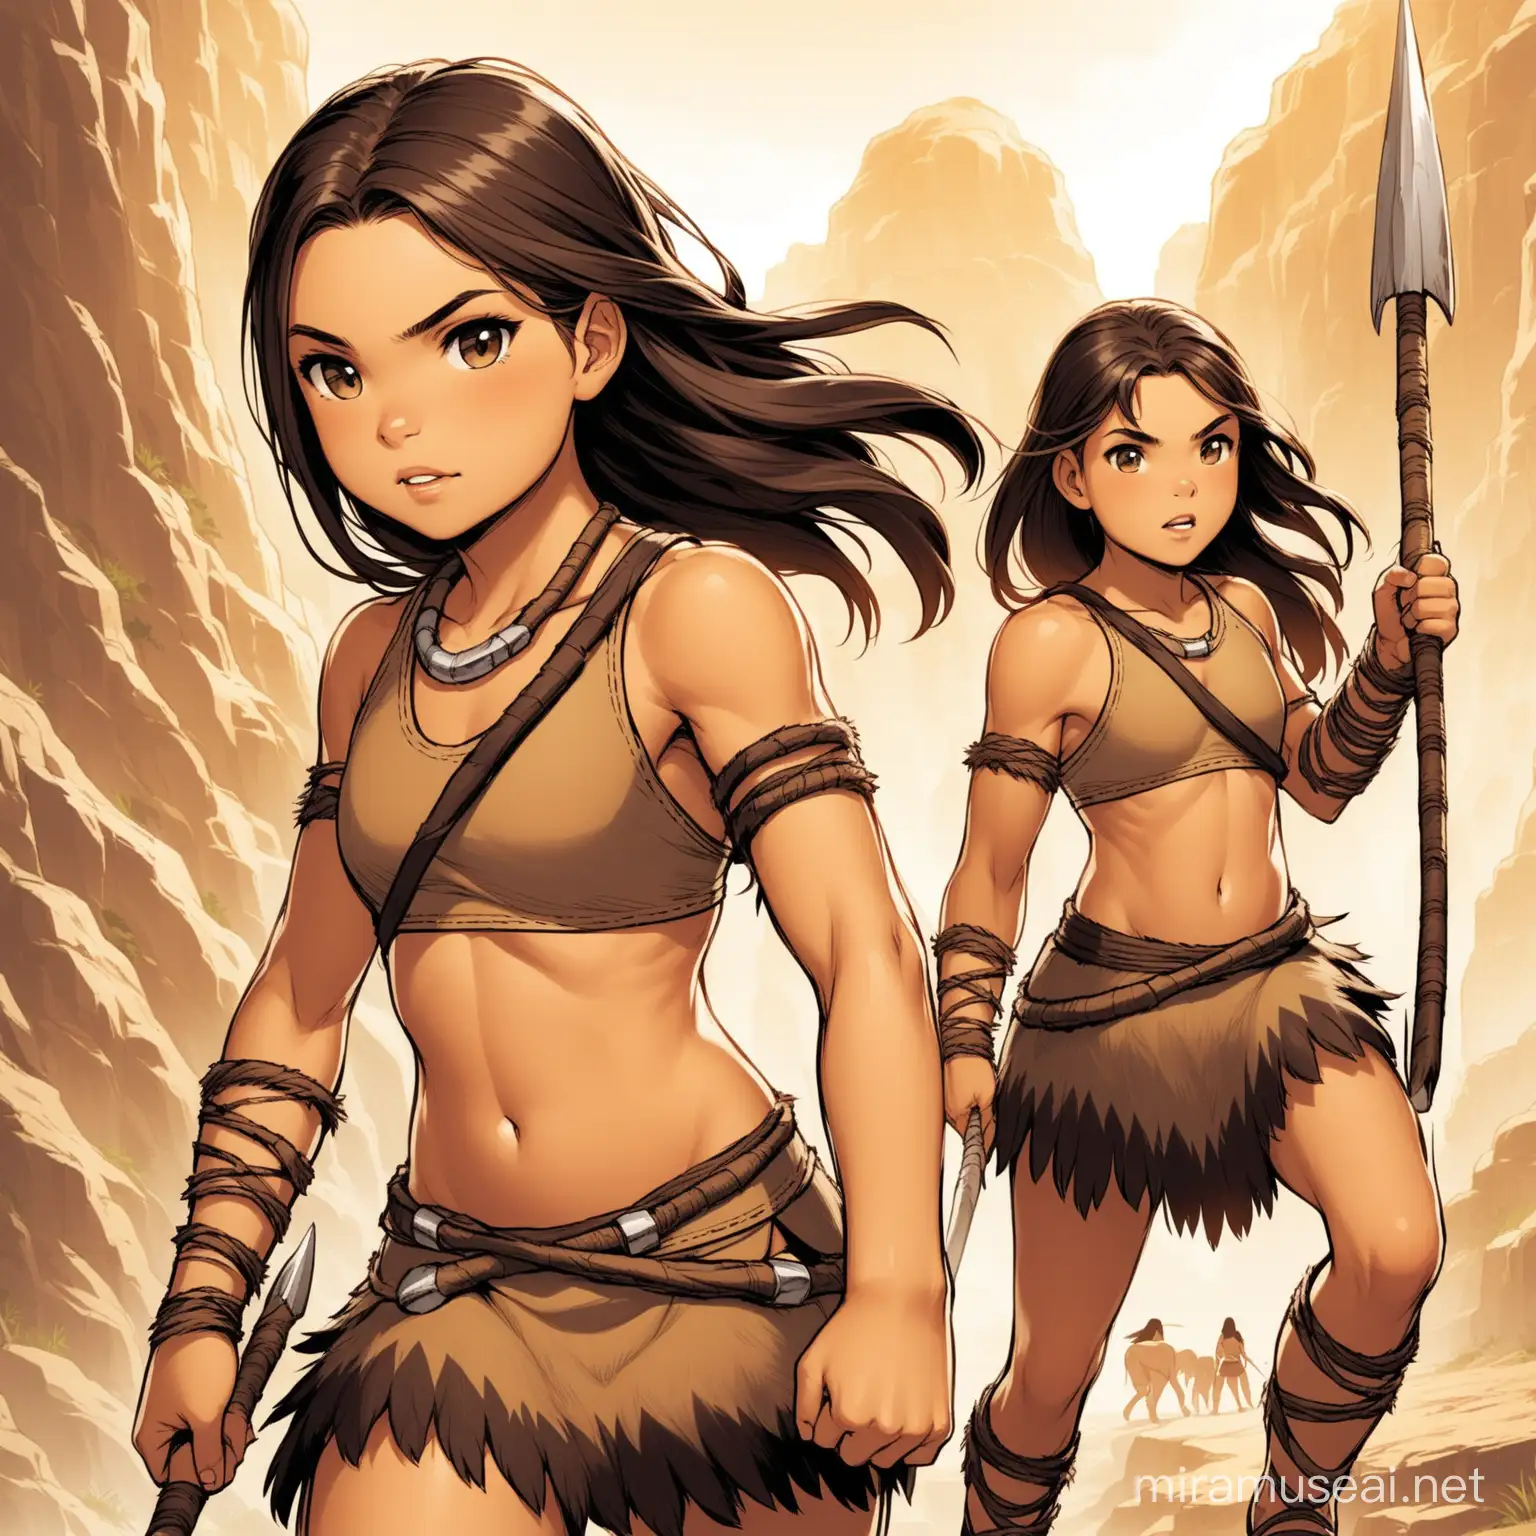 Paleolithic teenage warrior girls